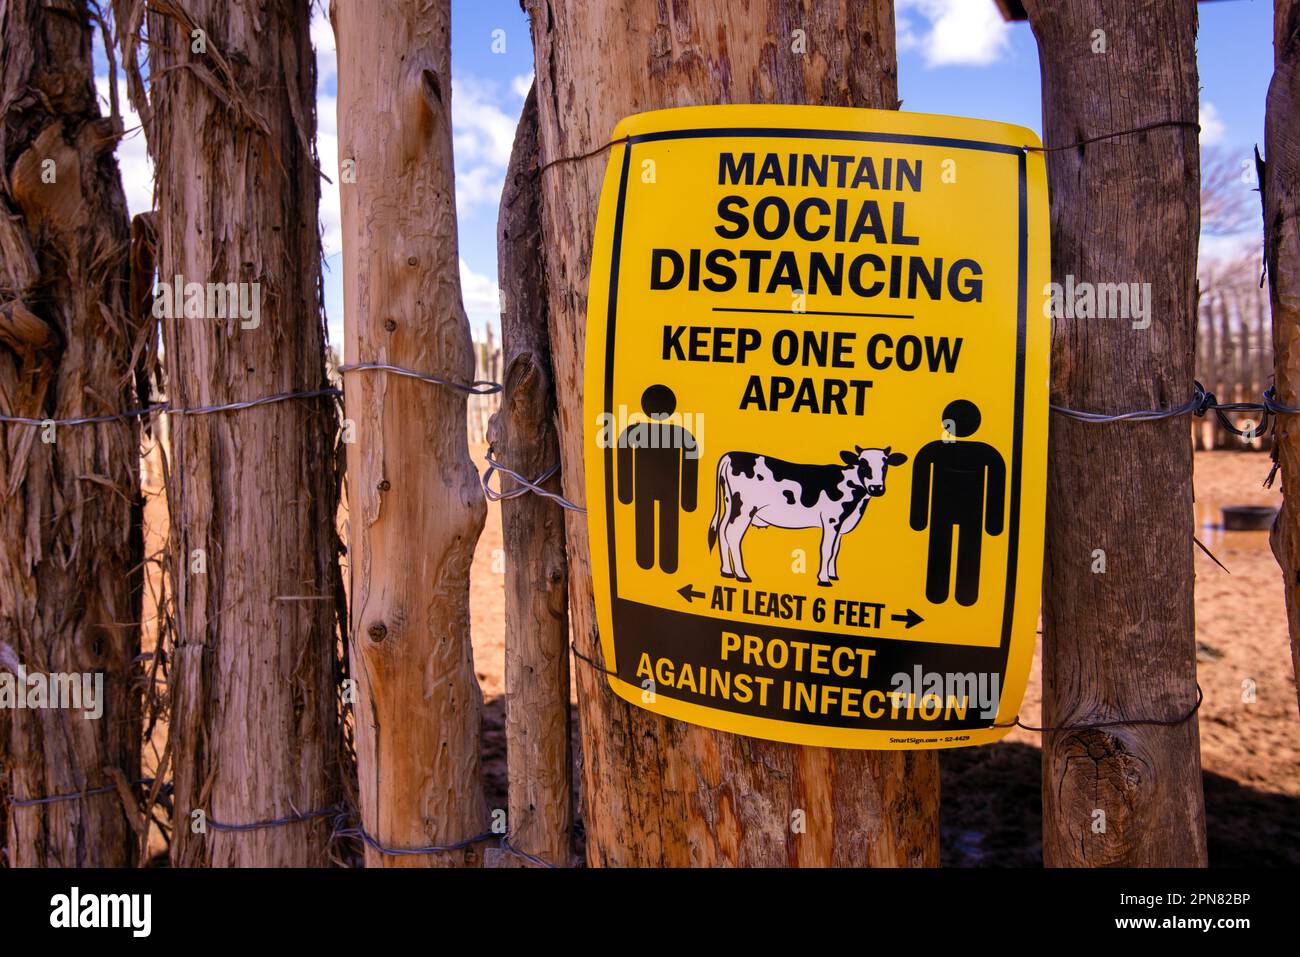 Social distancing sign at Pipe Spring National Monument, Arizona Stock Photo